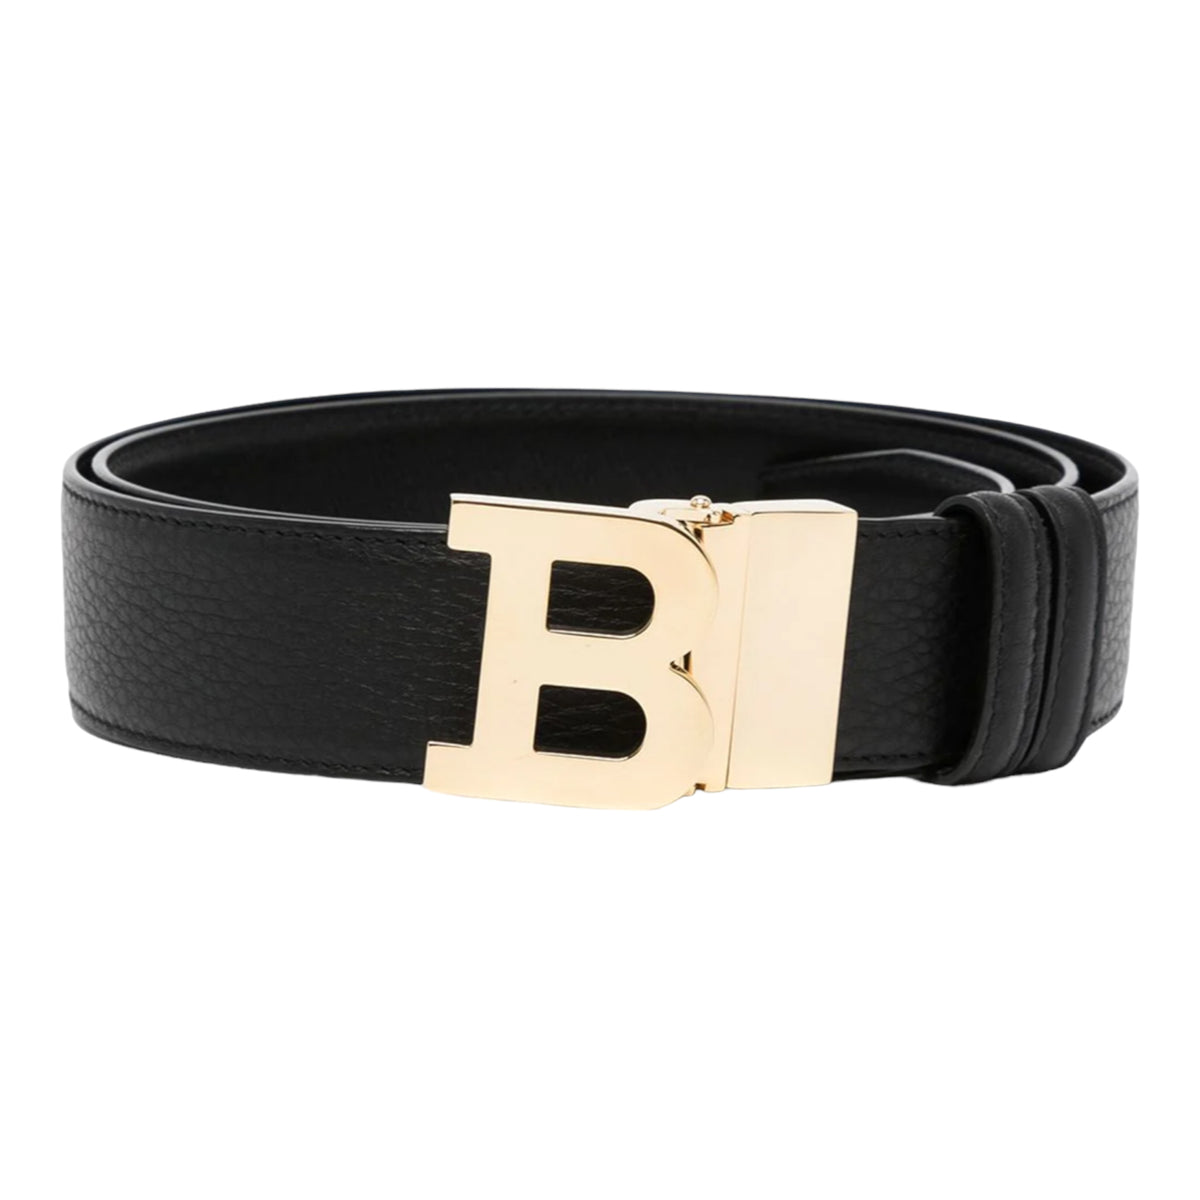 Bally Men's B Buckle Adjustable & Reversible Leather Belt